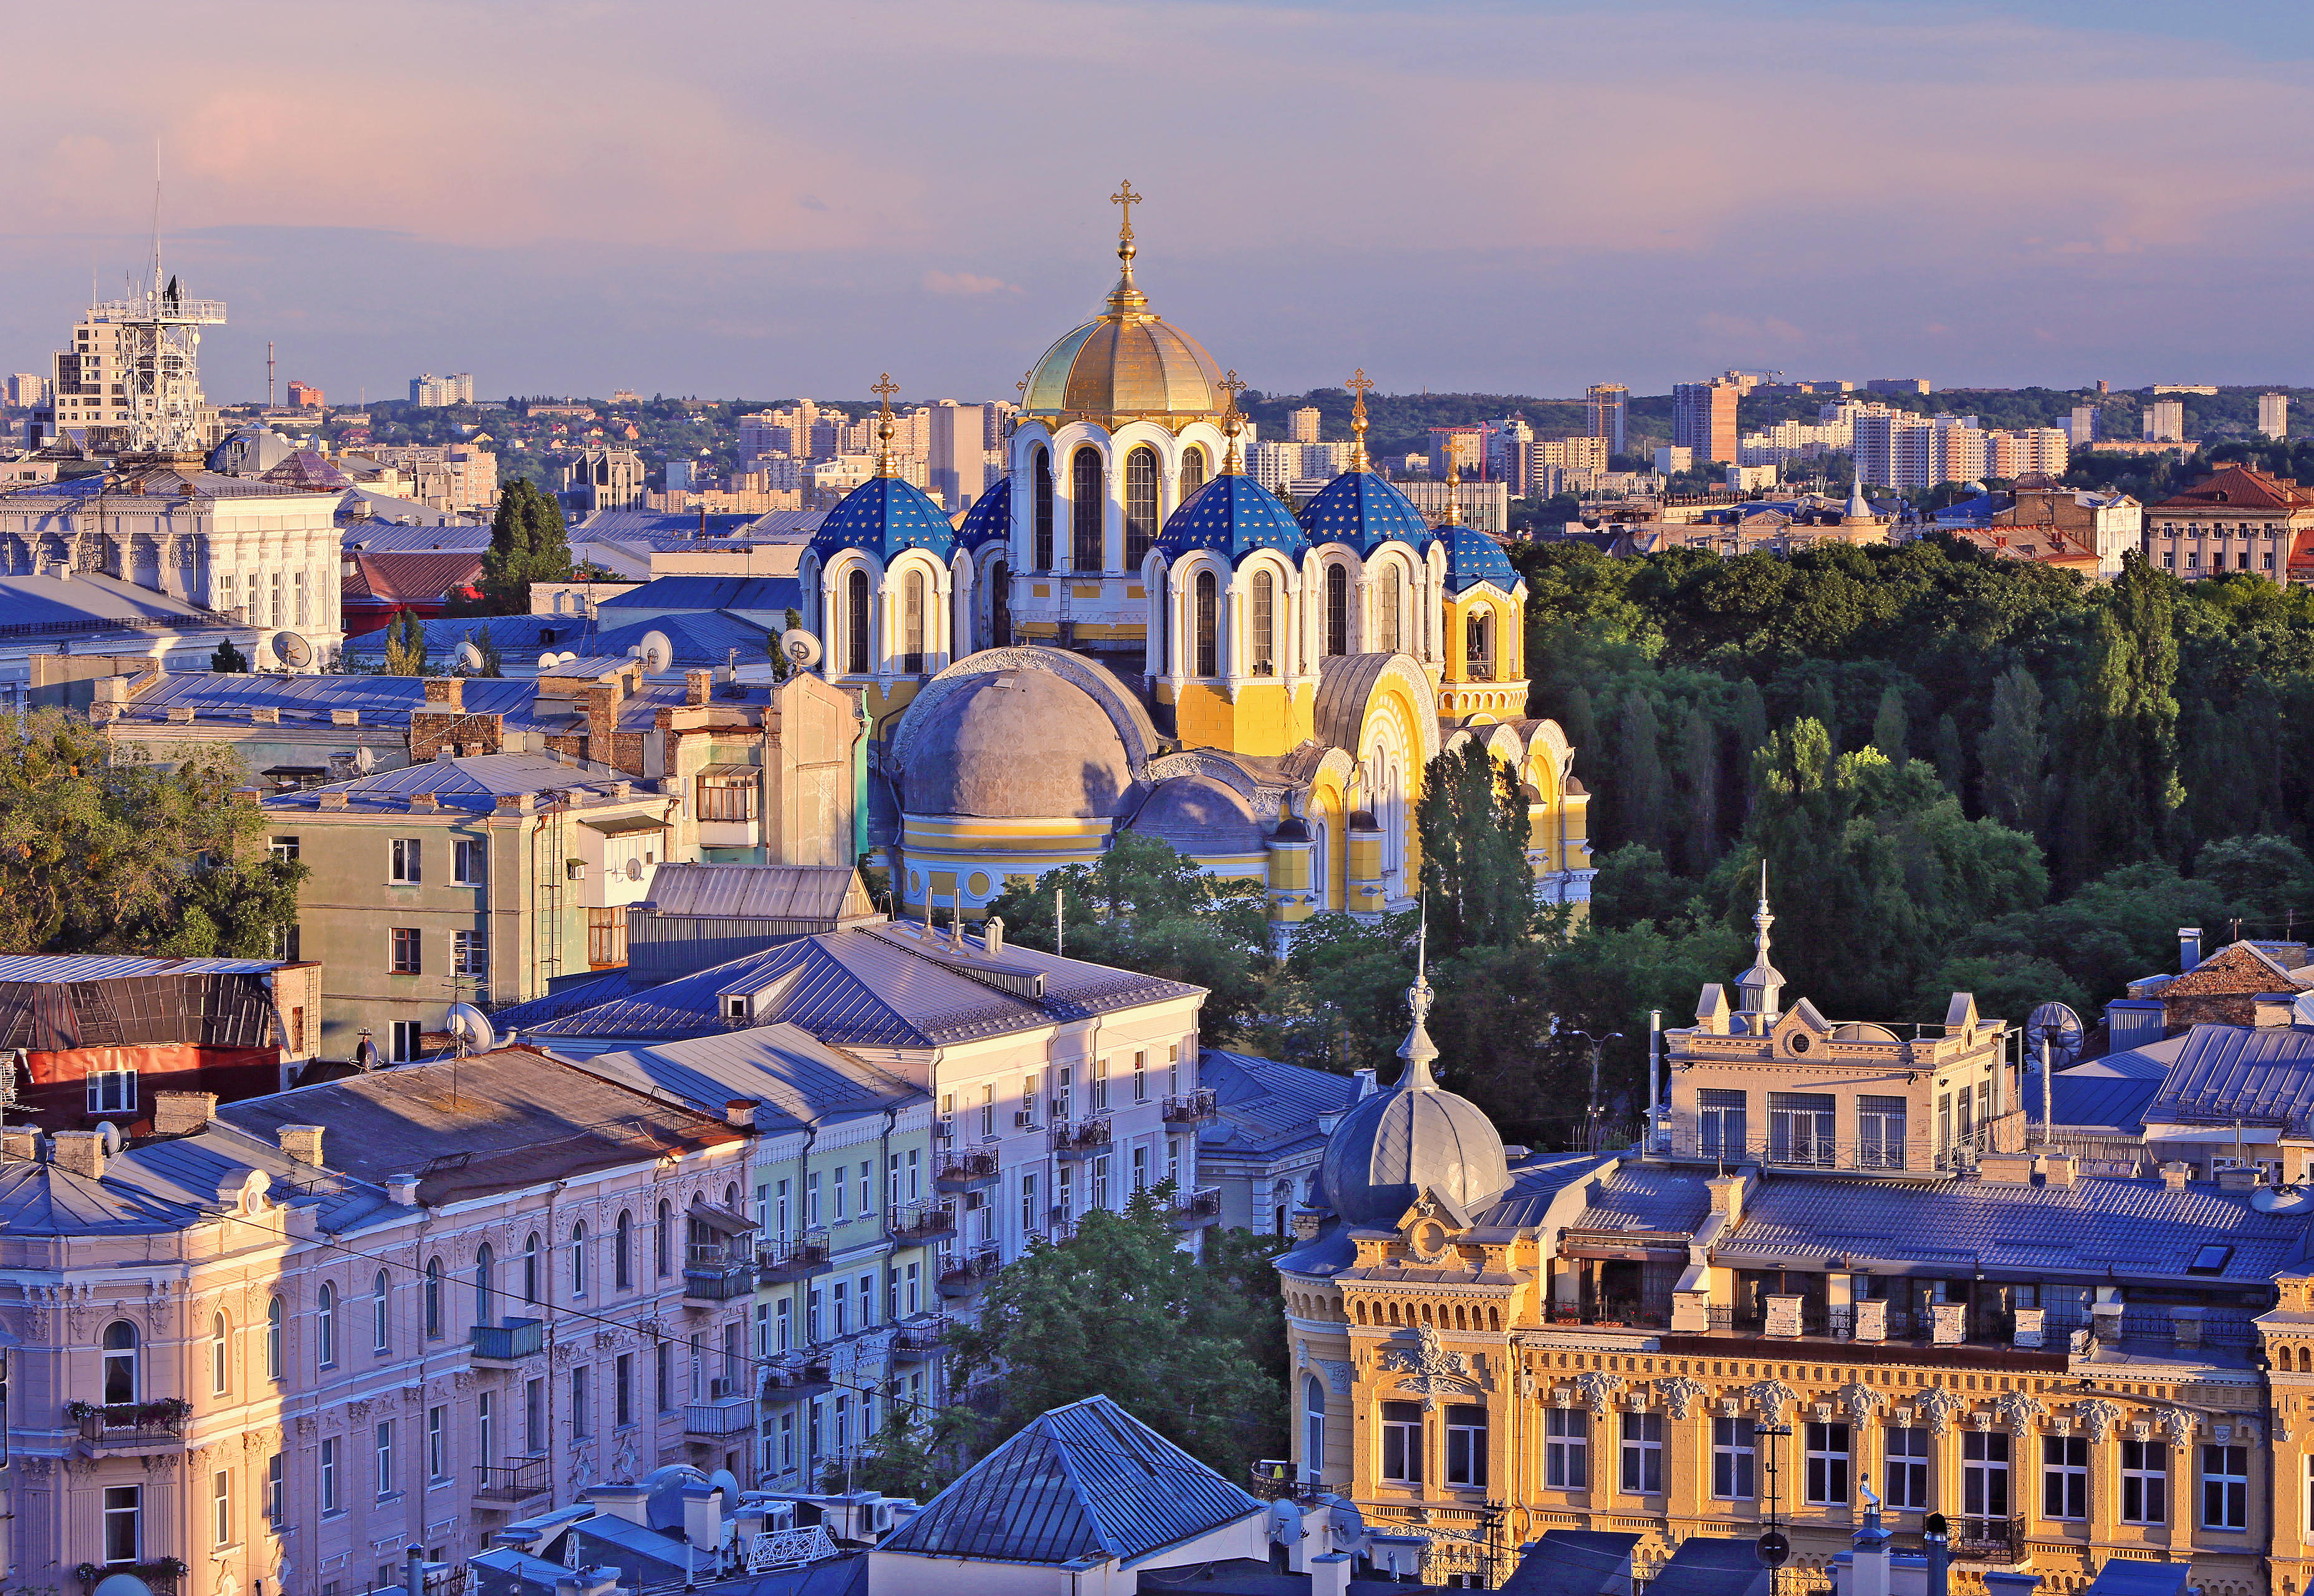 Kiev panorama with Volodymyrsky cathedral, Kiev, Ukraine